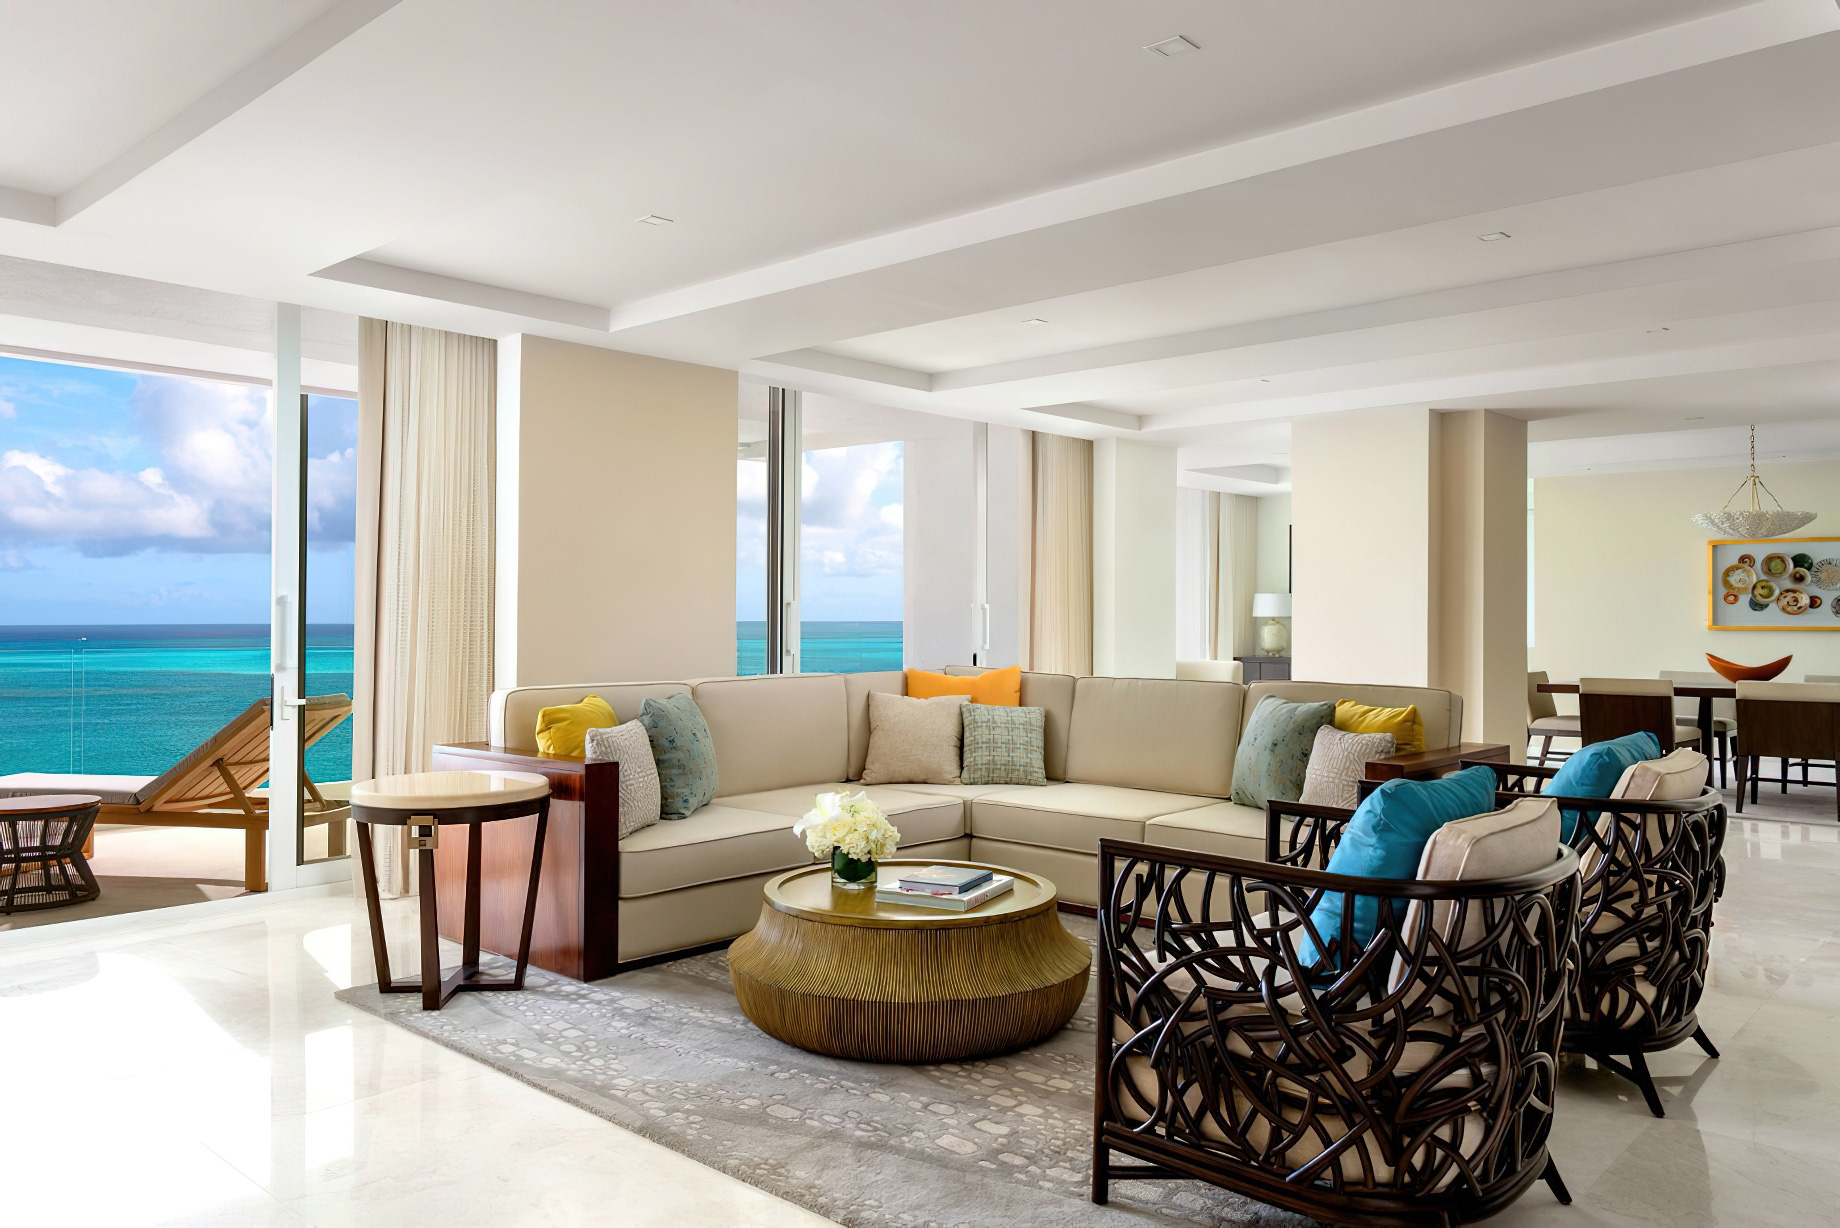 The Ritz-Carlton, Turks & Caicos Resort - Providenciales, Turks and Caicos Islands - Ritz-Carlton Suite Living Room